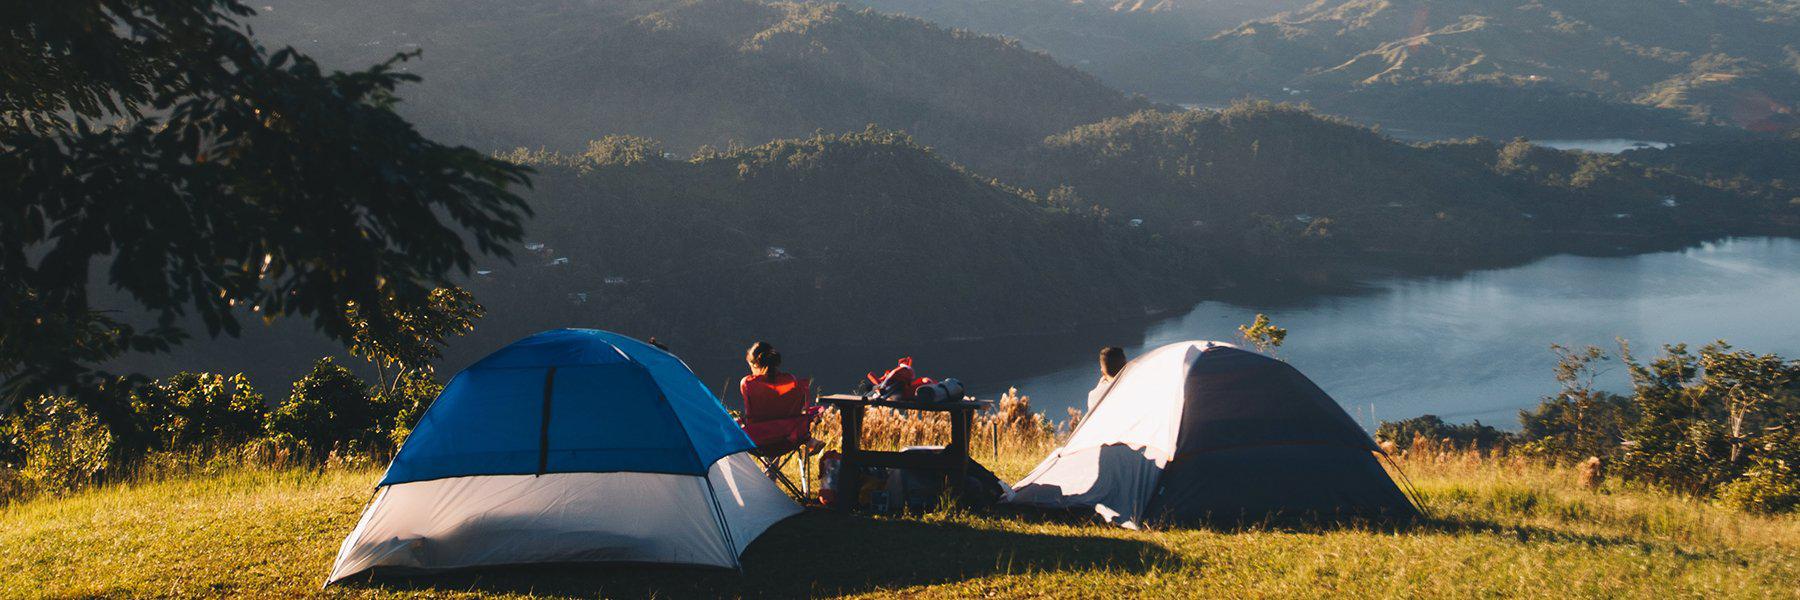 5 fun outdoor camping activities